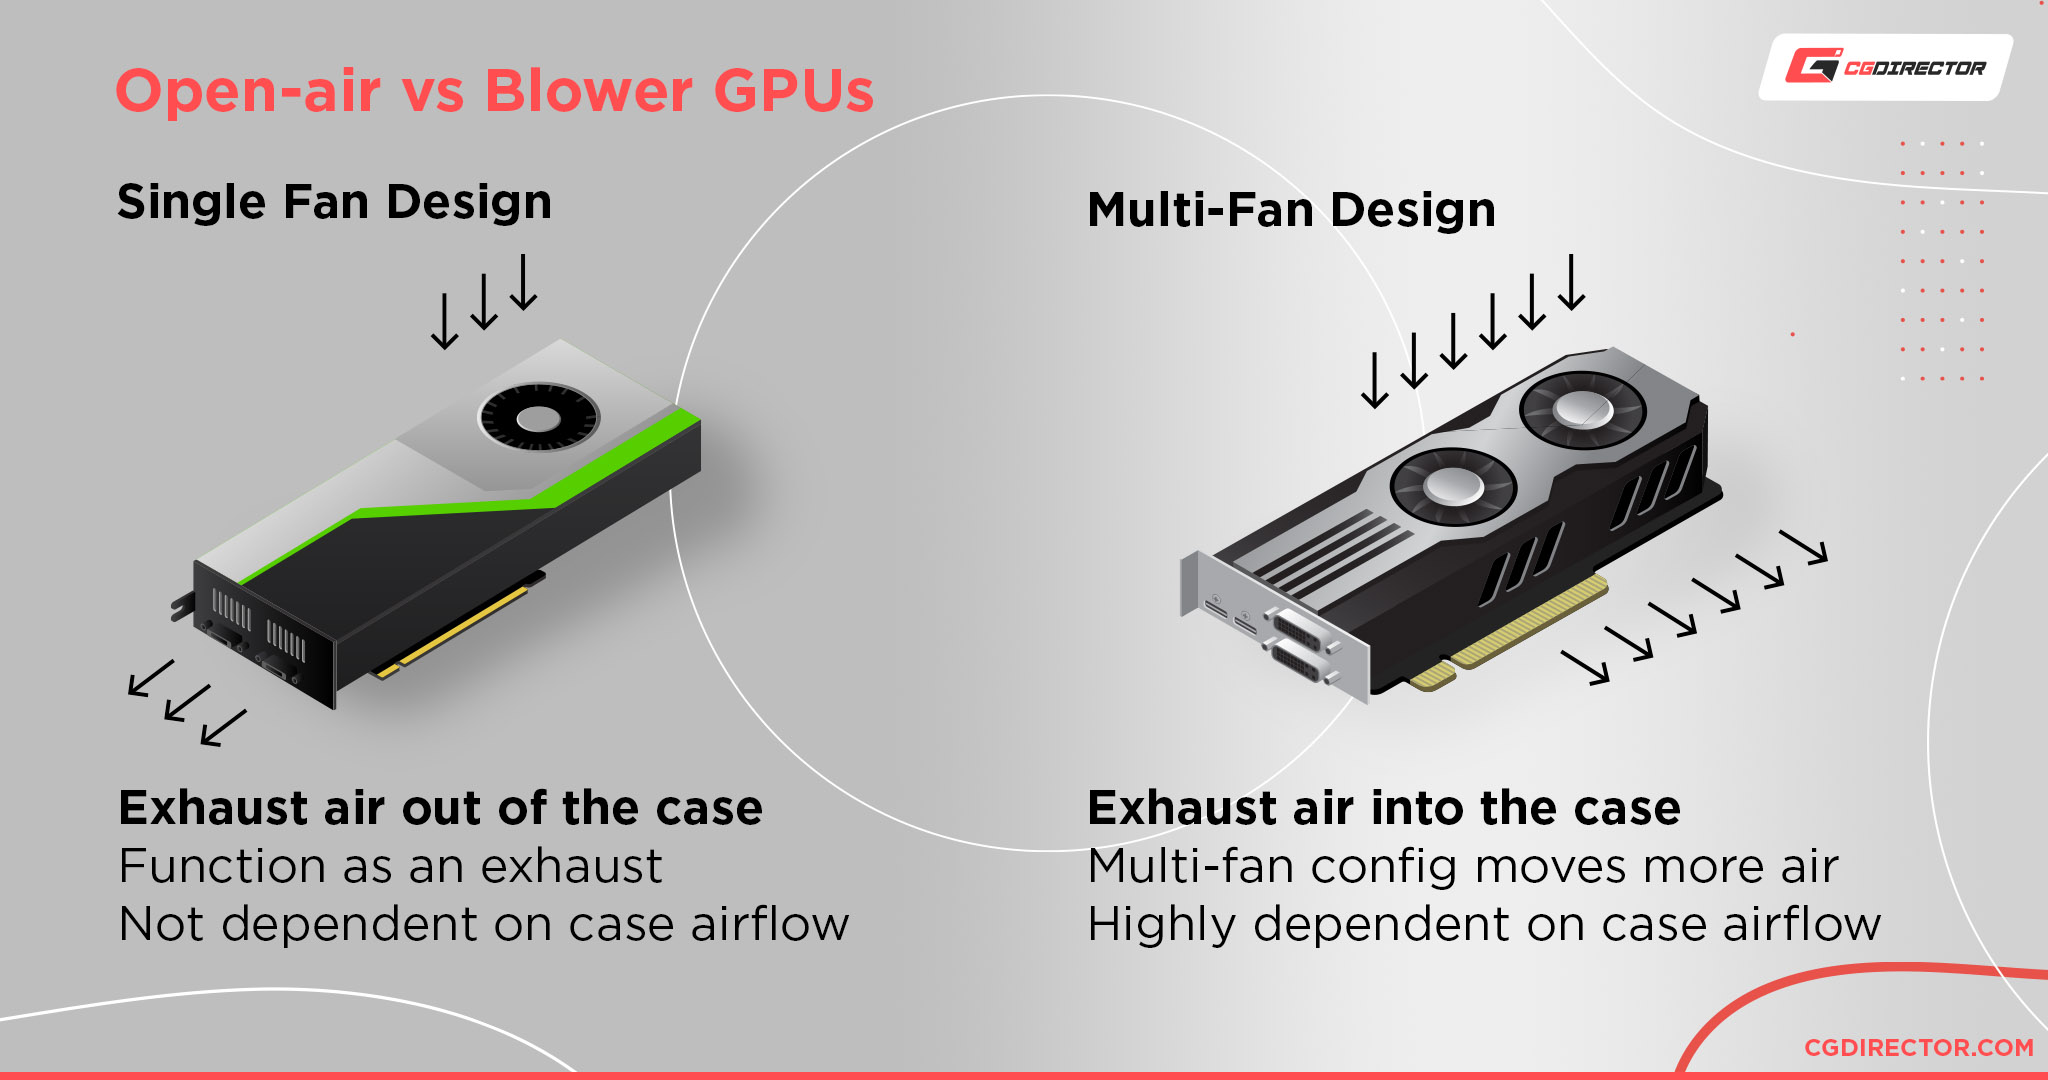 Blower style vs open-air GPU